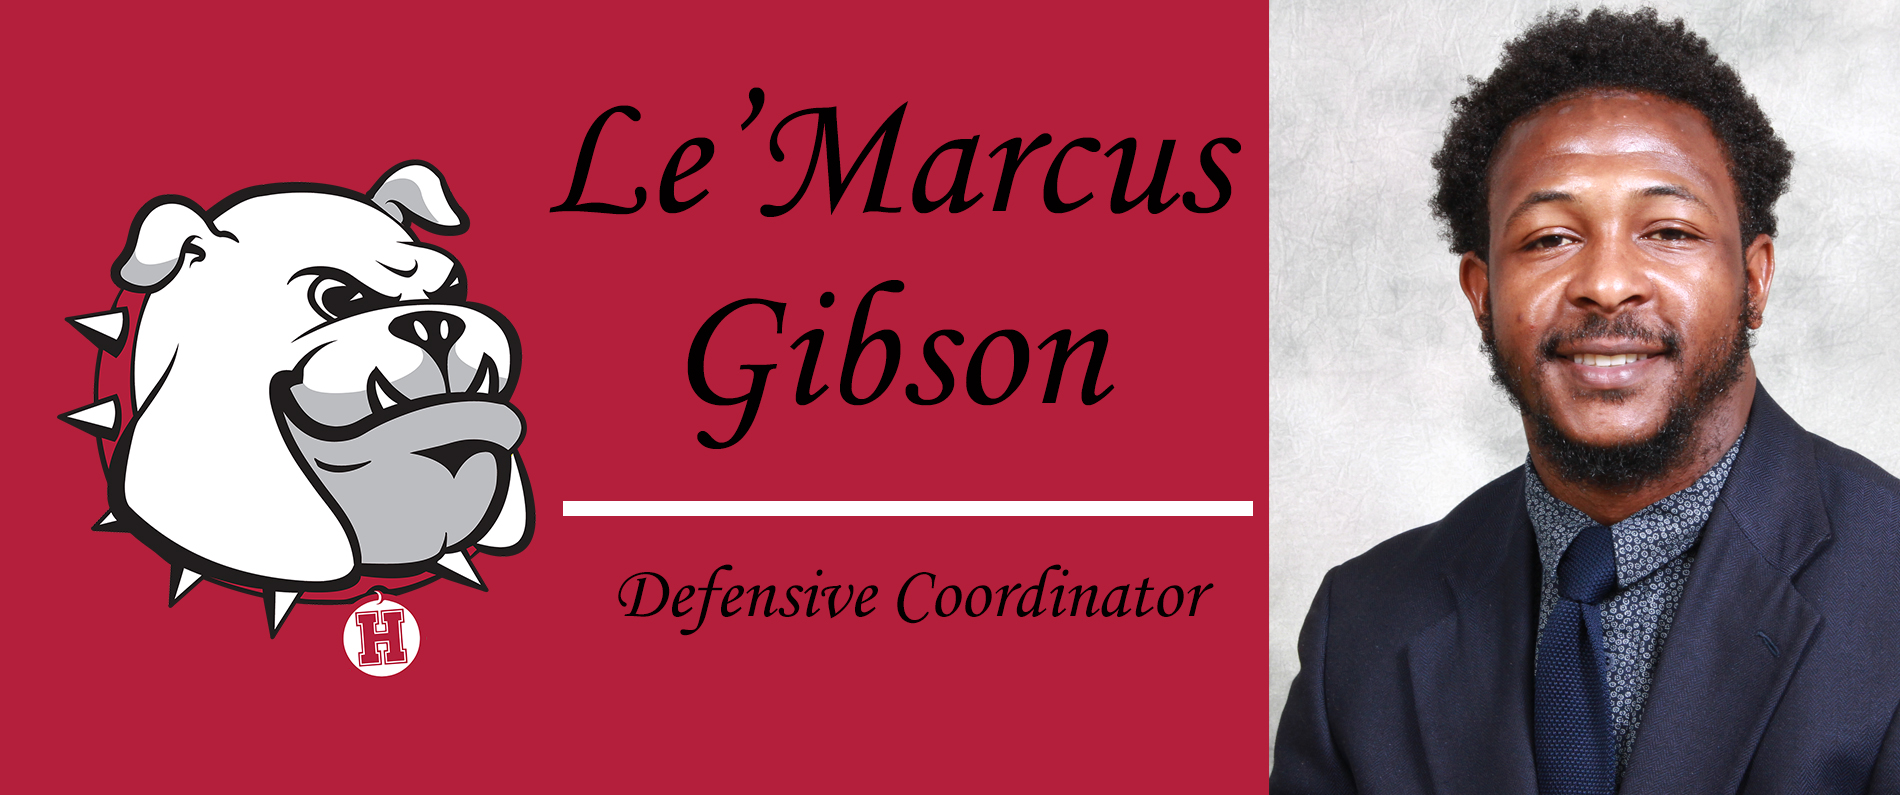 Gibson named new defensive coordinator